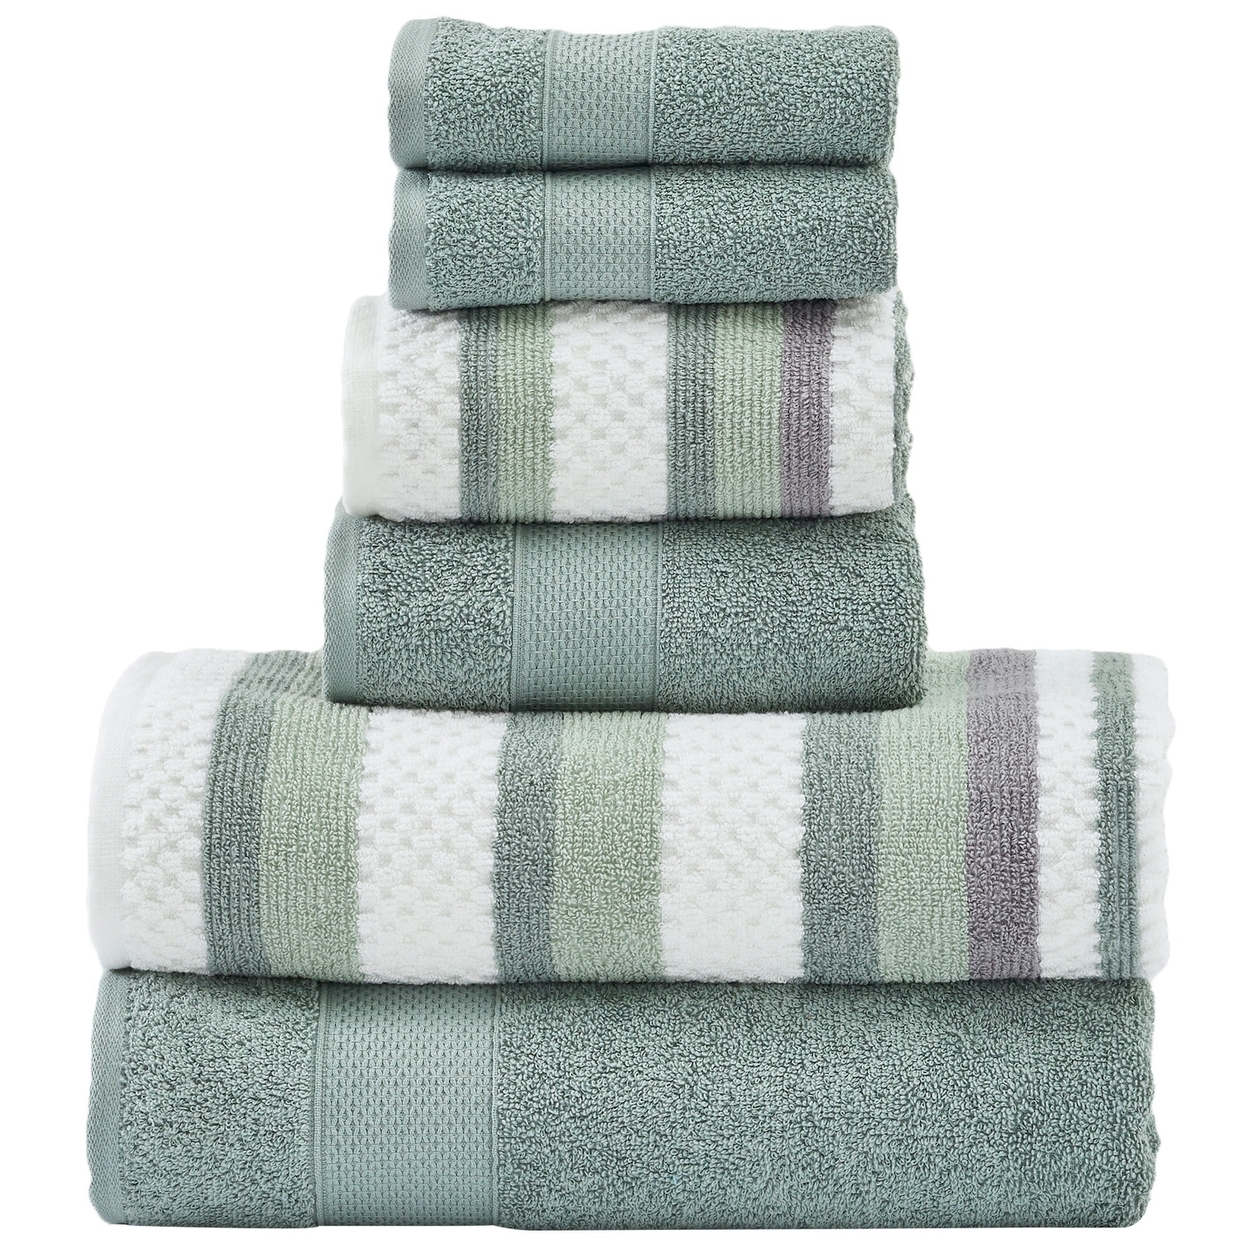 Nyx 6pc Soft Cotton Towel Set, Striped, White, Light Gray By The Urban Port- Saltoro Sherpi